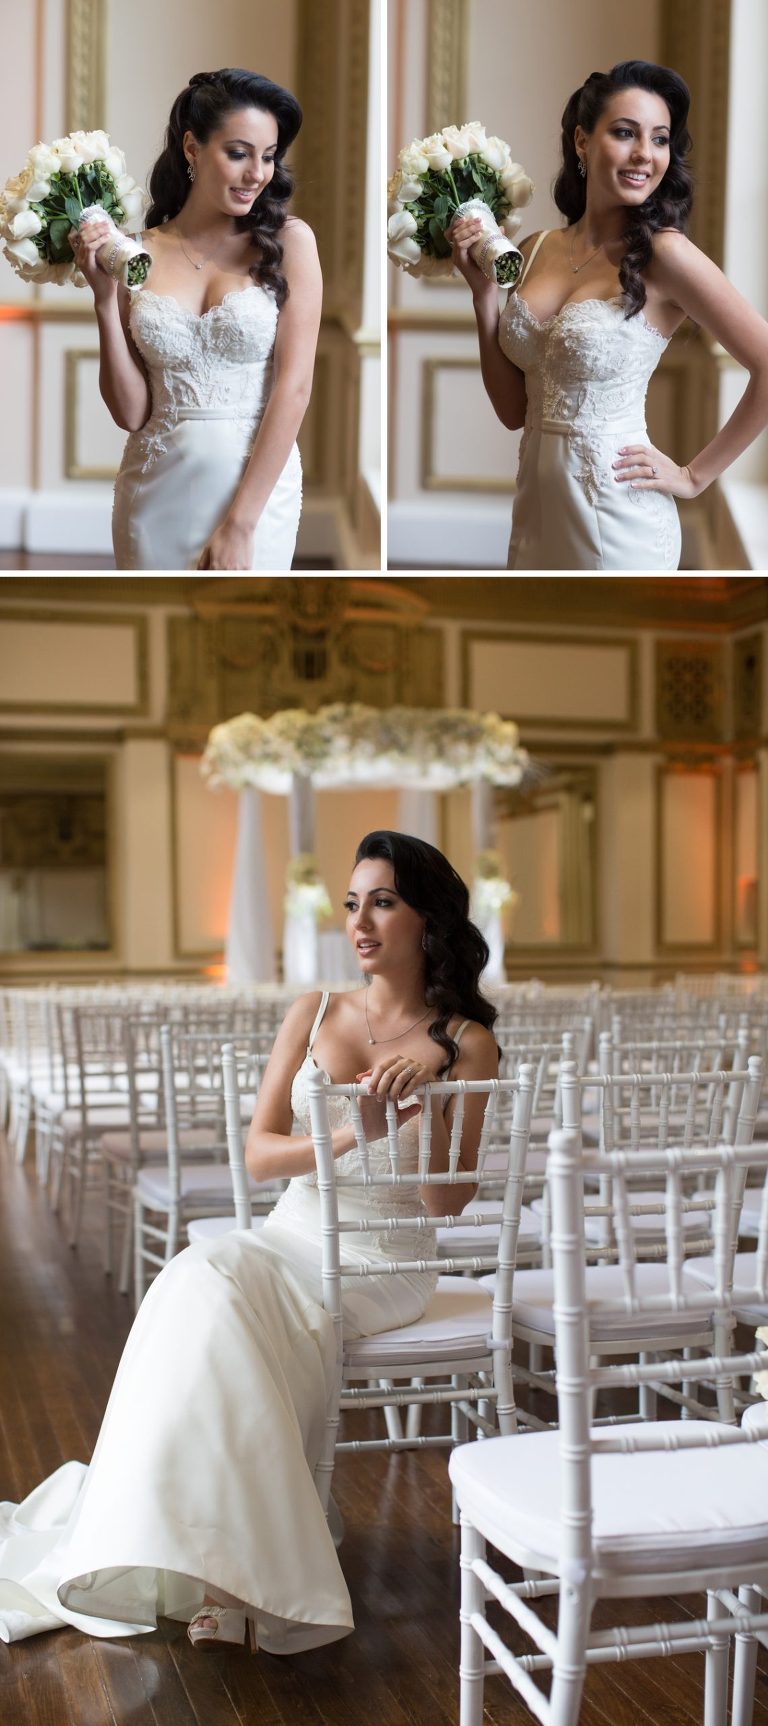 The beautiful bride | Alexandria Ballrooms